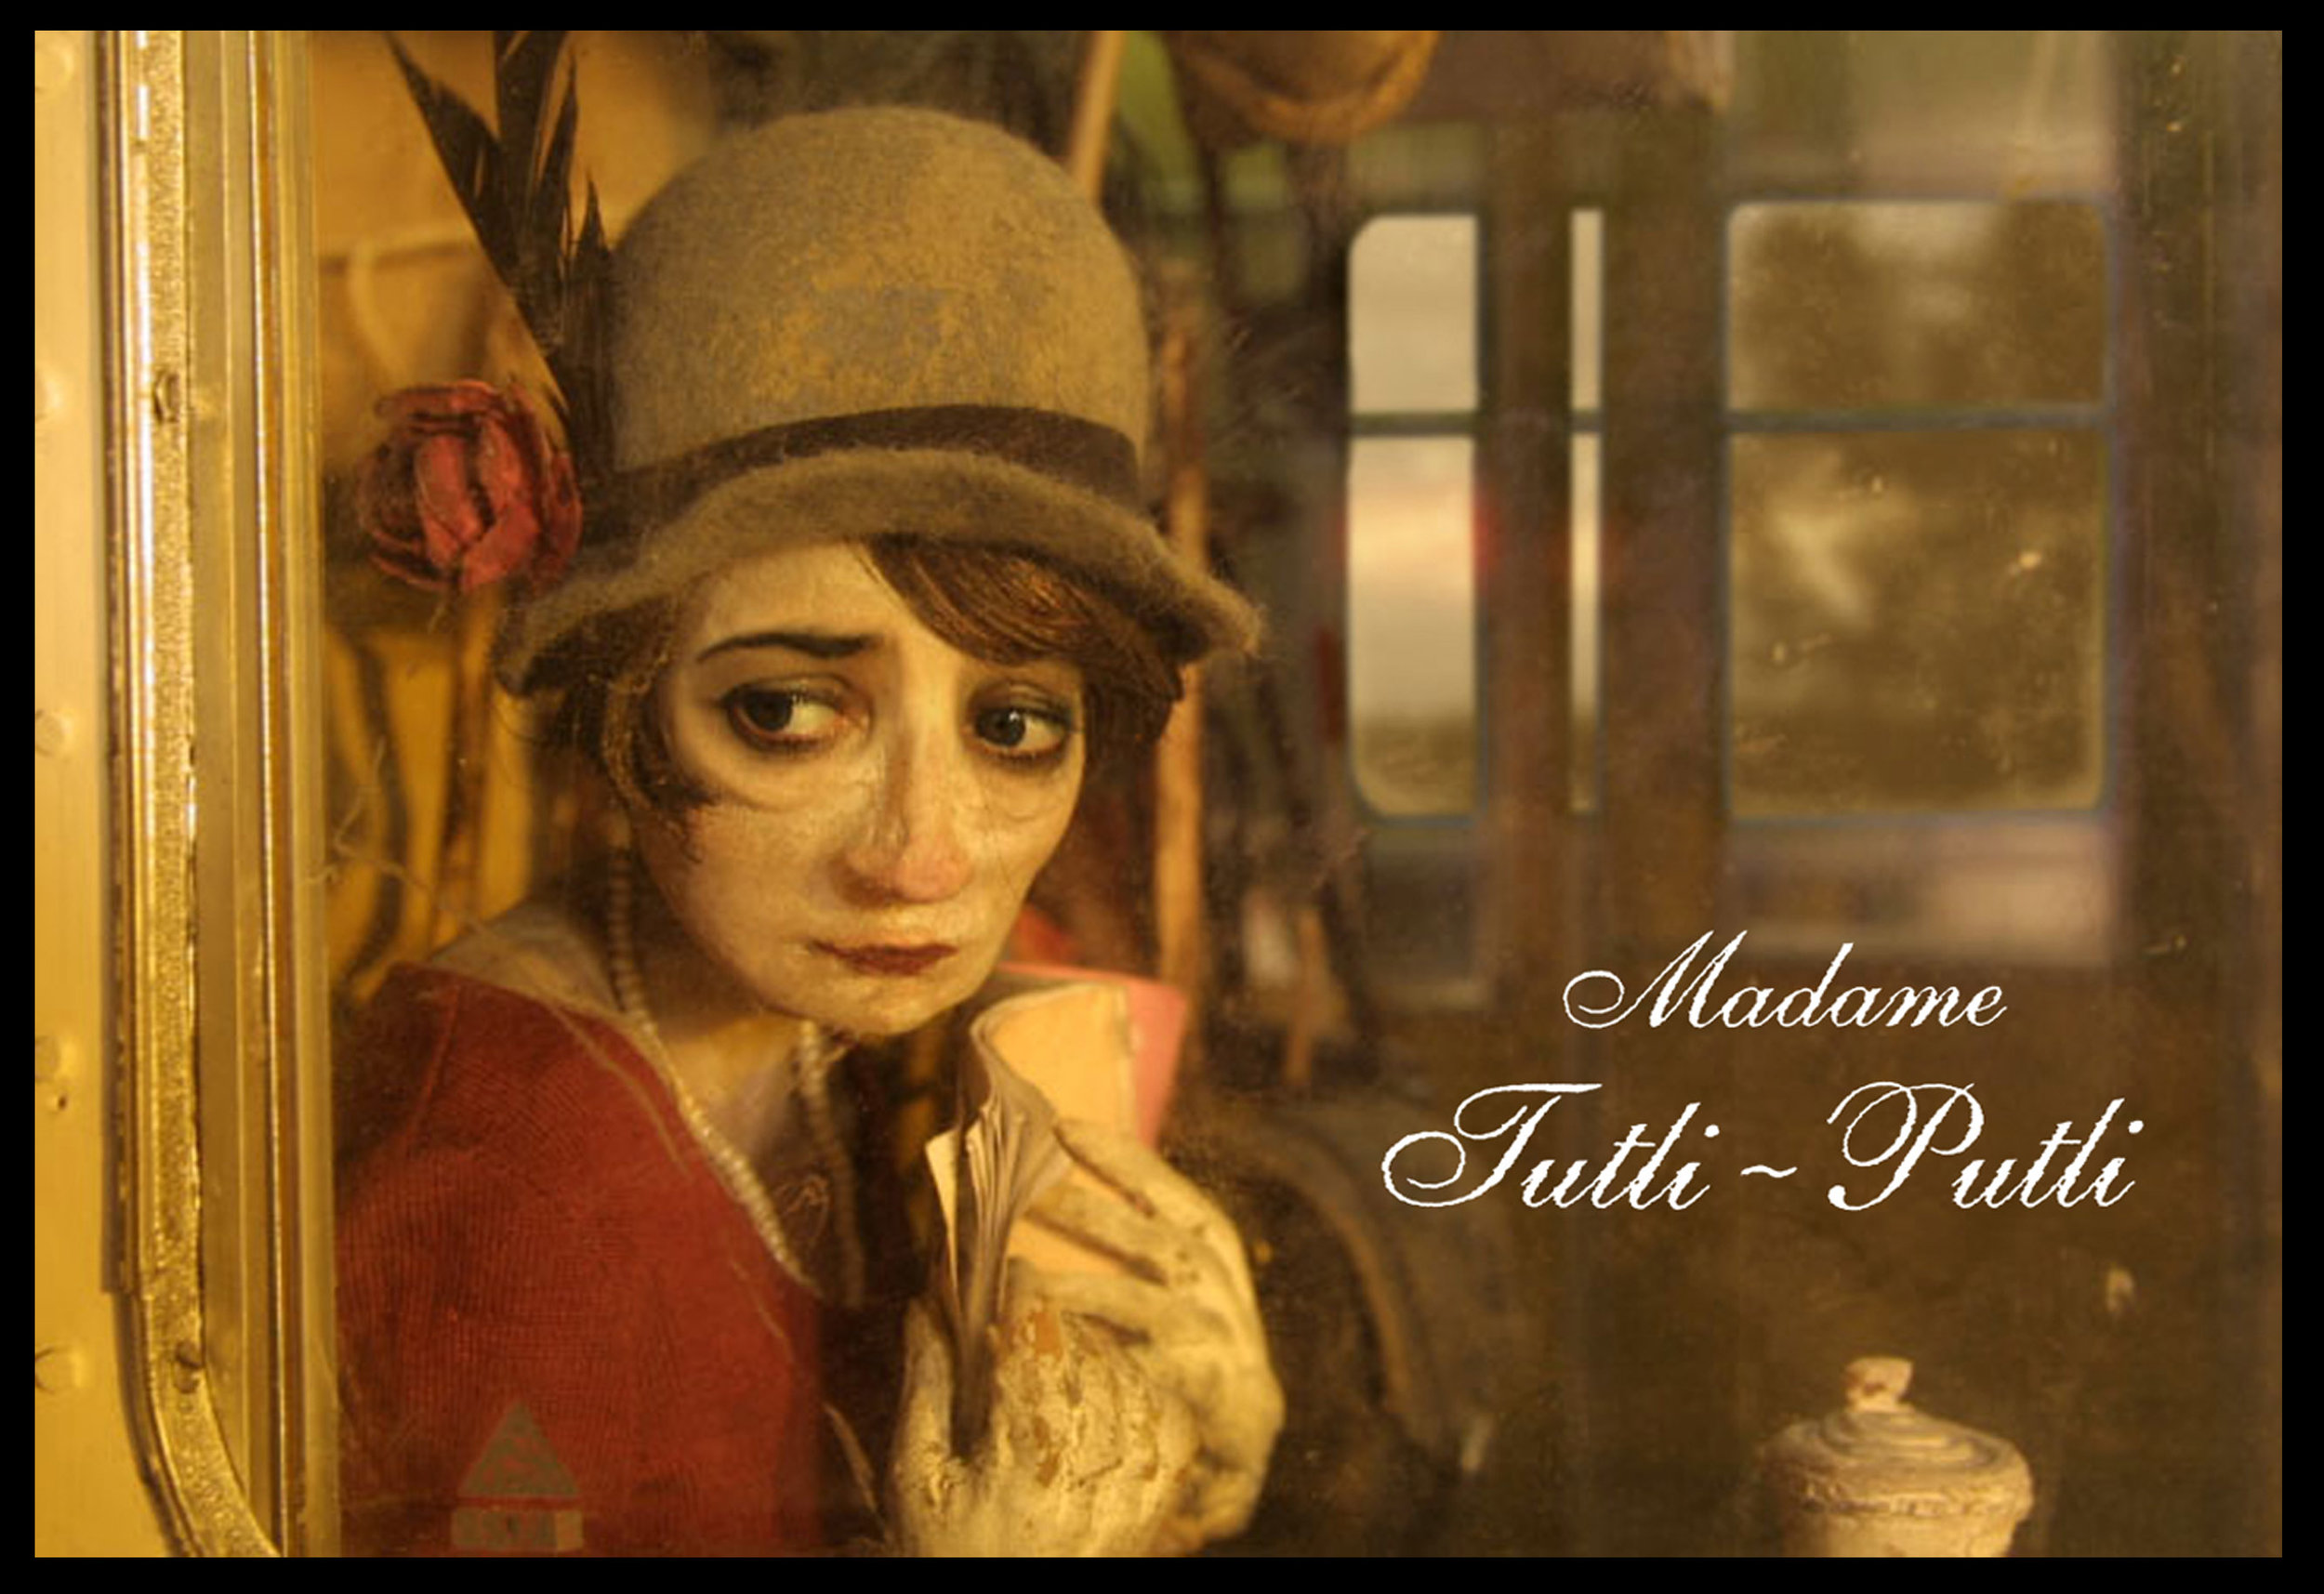 Madame Tutli-Putli. Oscar nominated short film by the National Film Board of Canada.